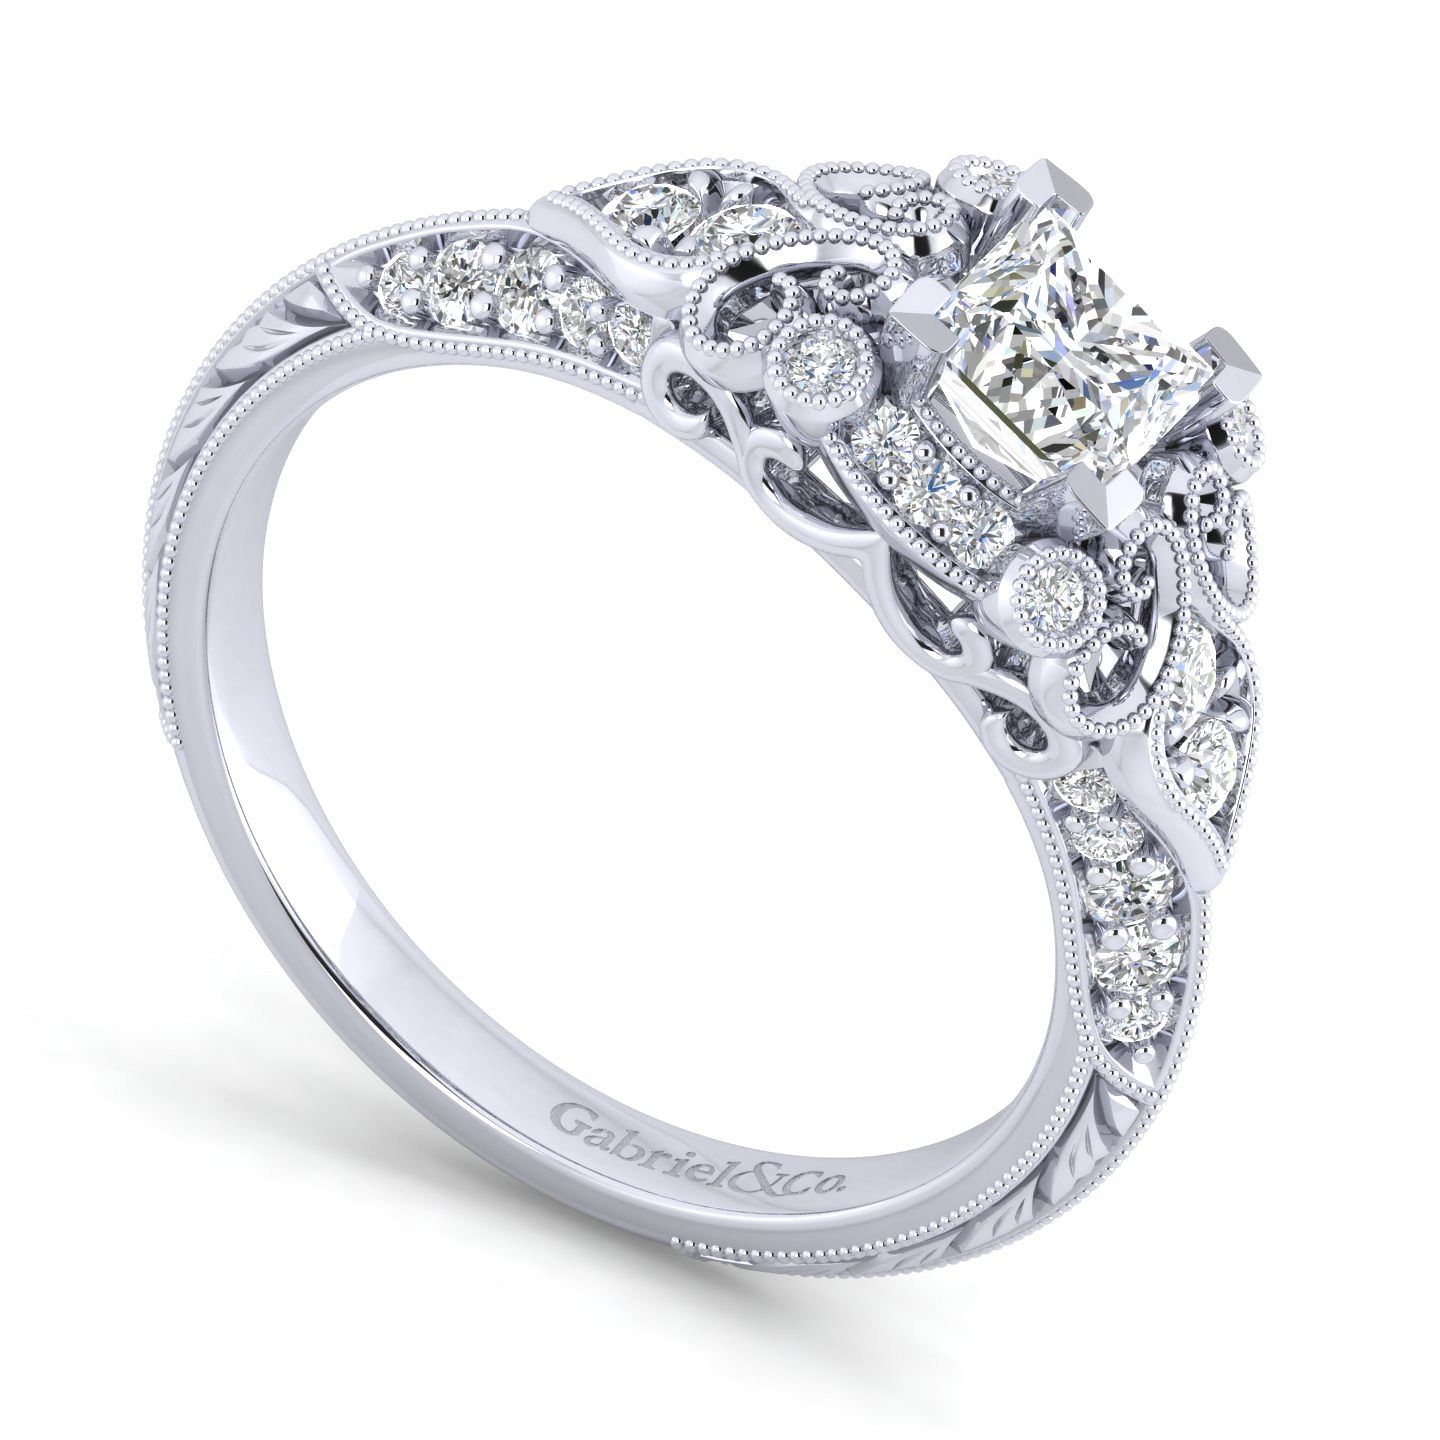 Unique 14K White Gold Vintage Inspired Princess Cut Diamond Halo Engagement Ring